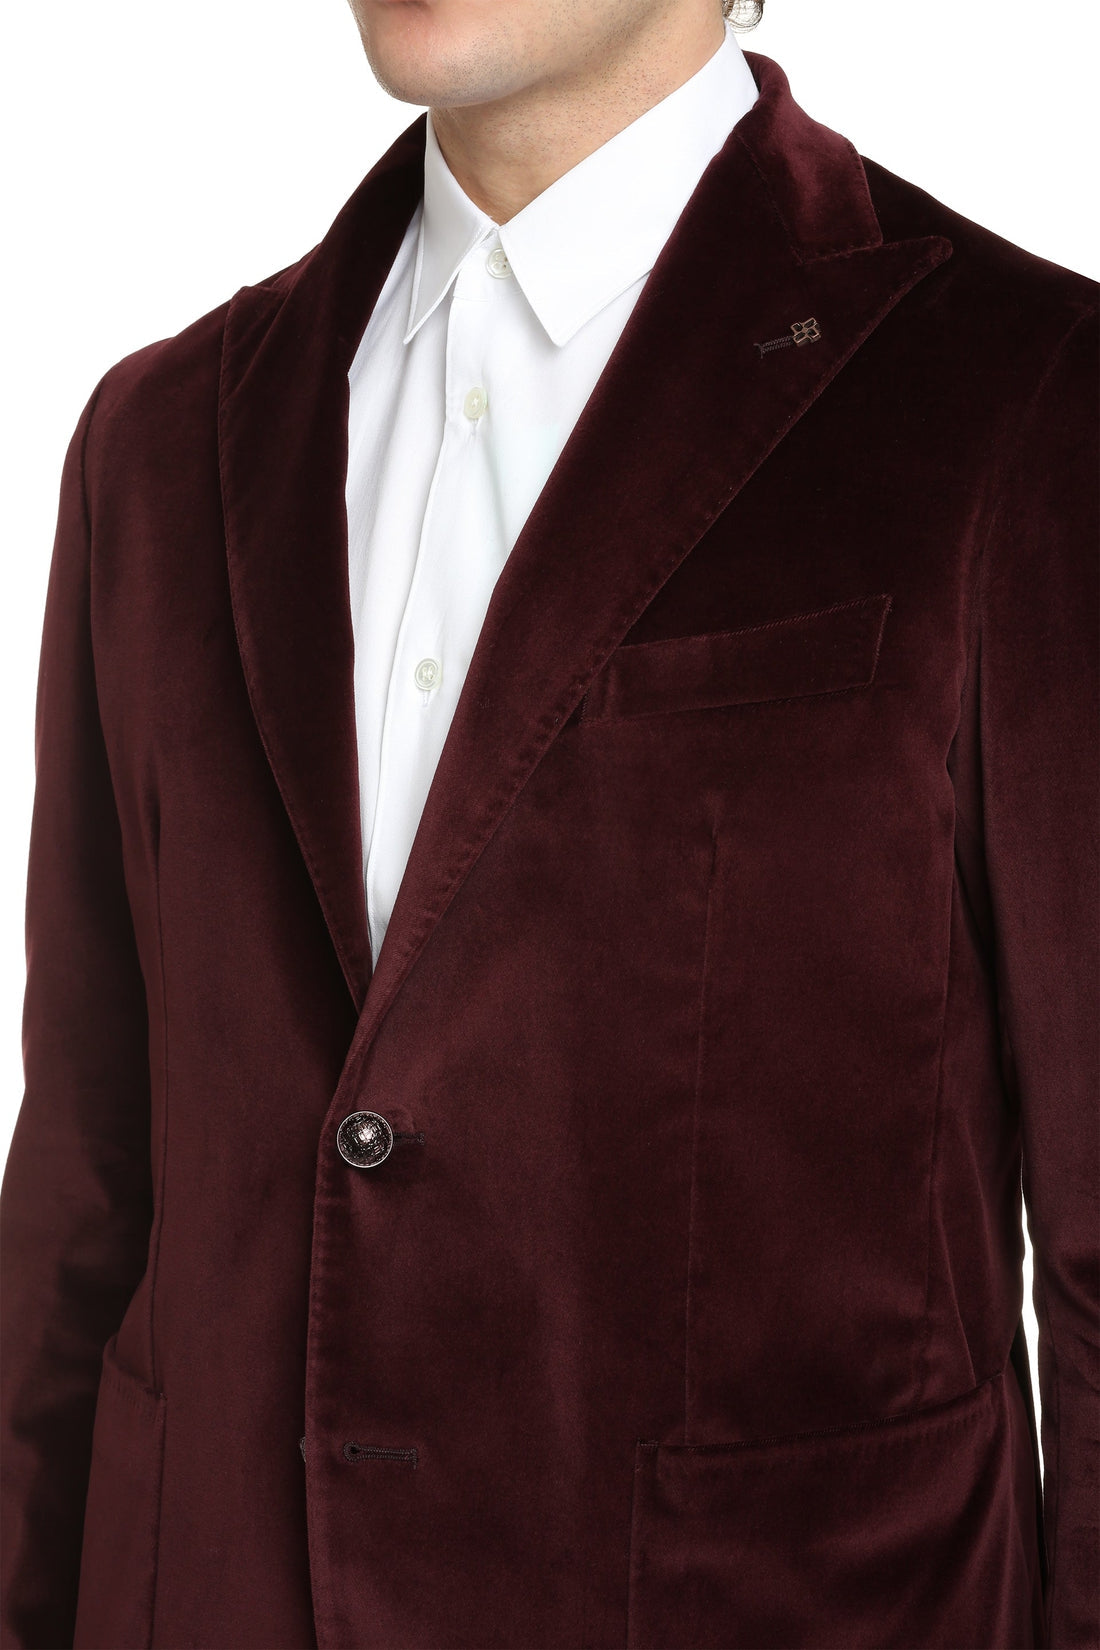 Tagliatore-OUTLET-SALE-Single-breasted velvet jacket-ARCHIVIST